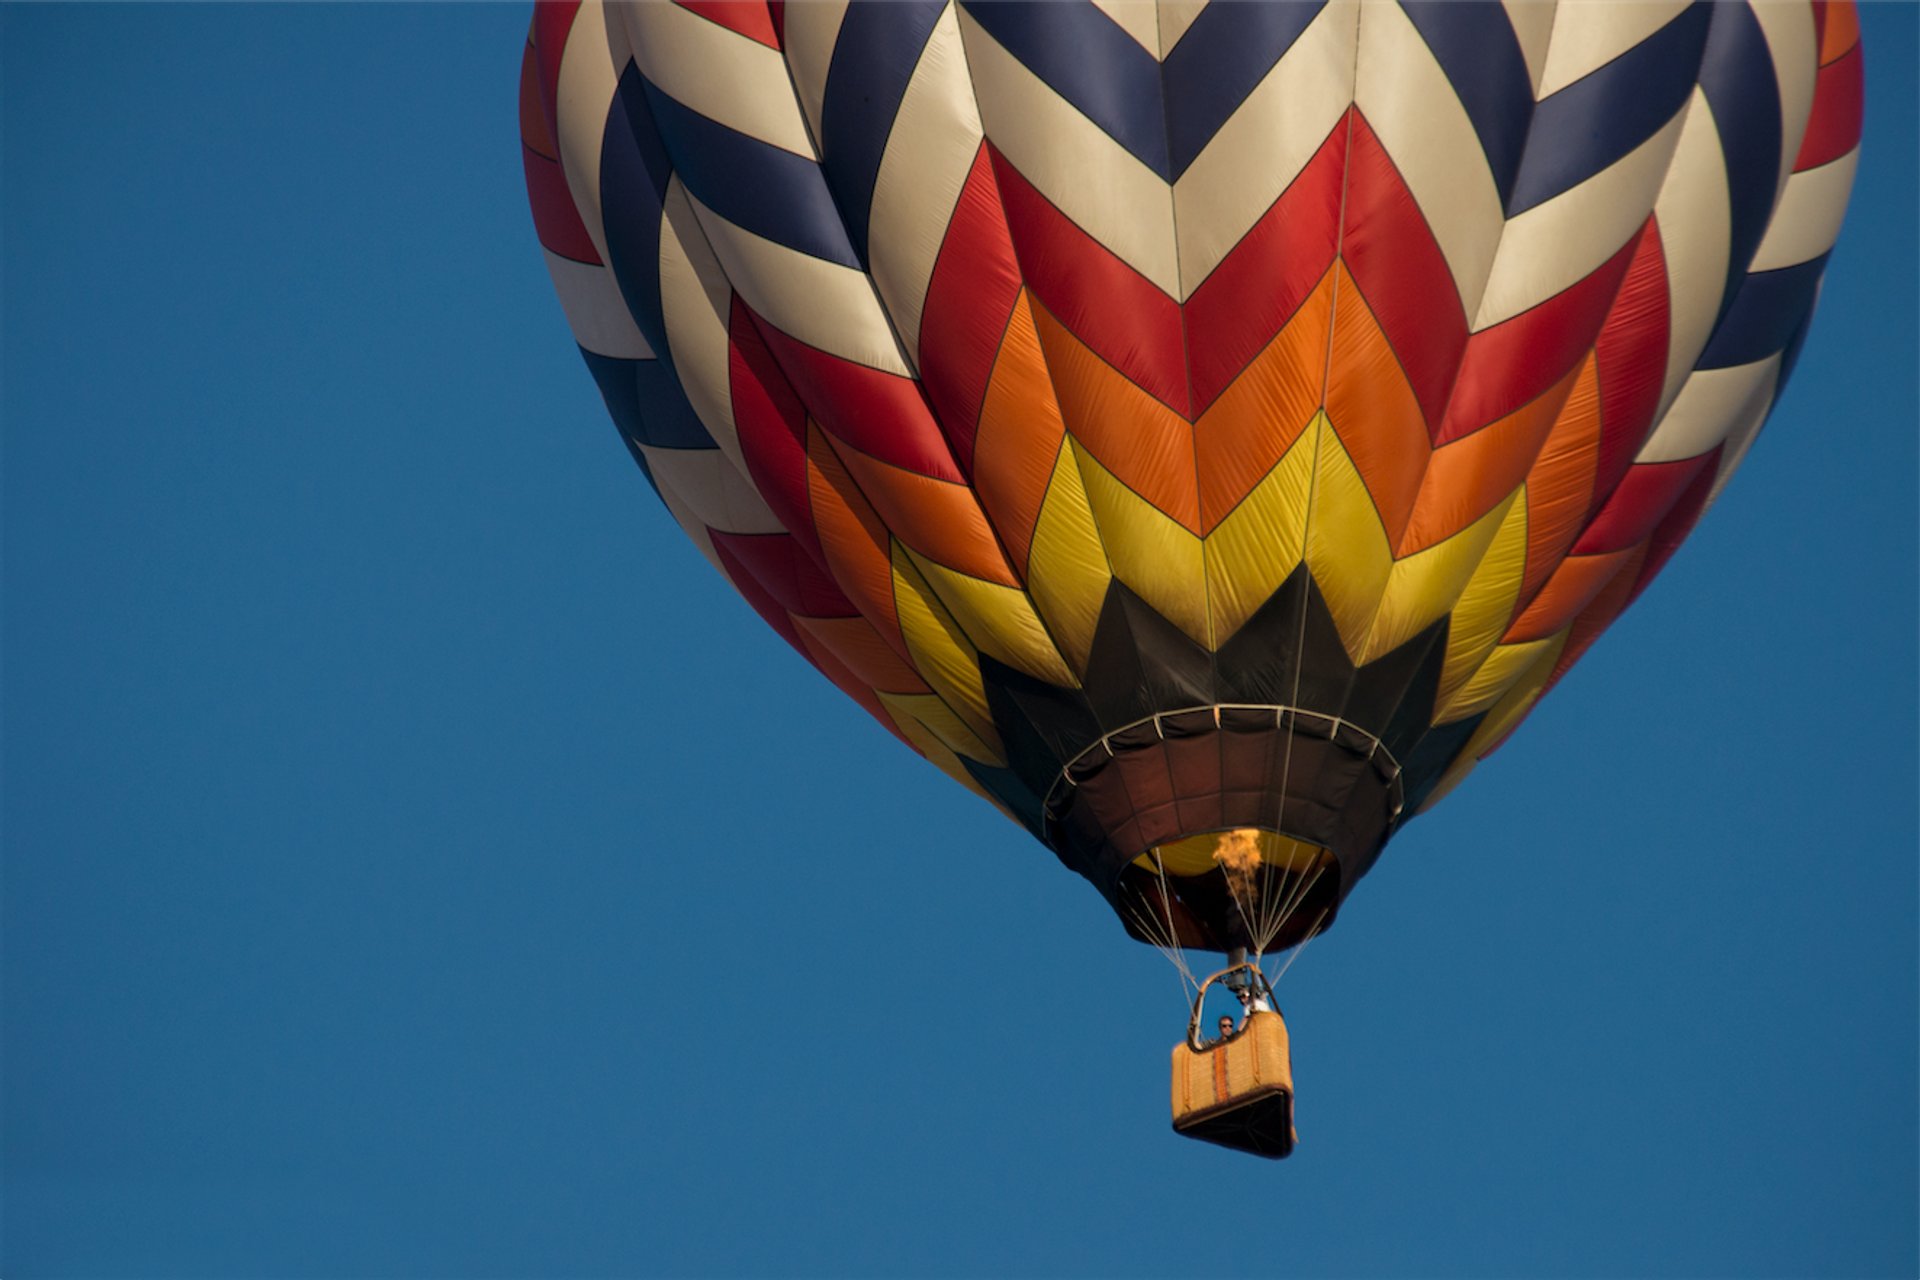 Gulf Coast Hot Air Balloon Festival 2020 in Alabama - Dates